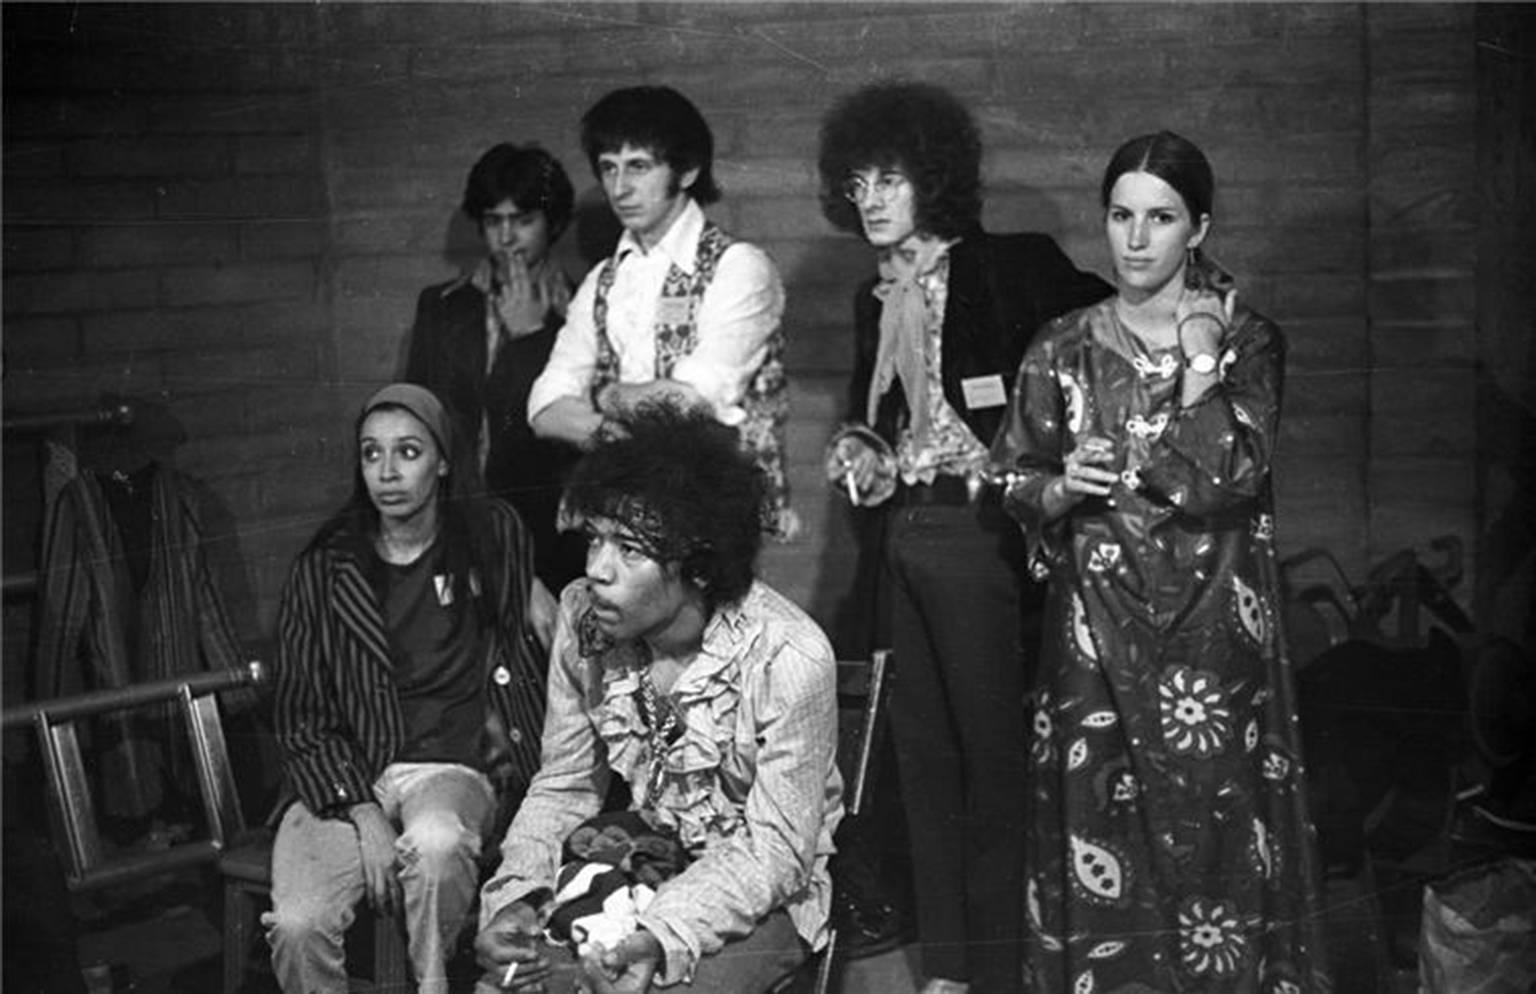 Henry Diltz Portrait Photograph - Jimi Hendrix, Monterey, CA 1967